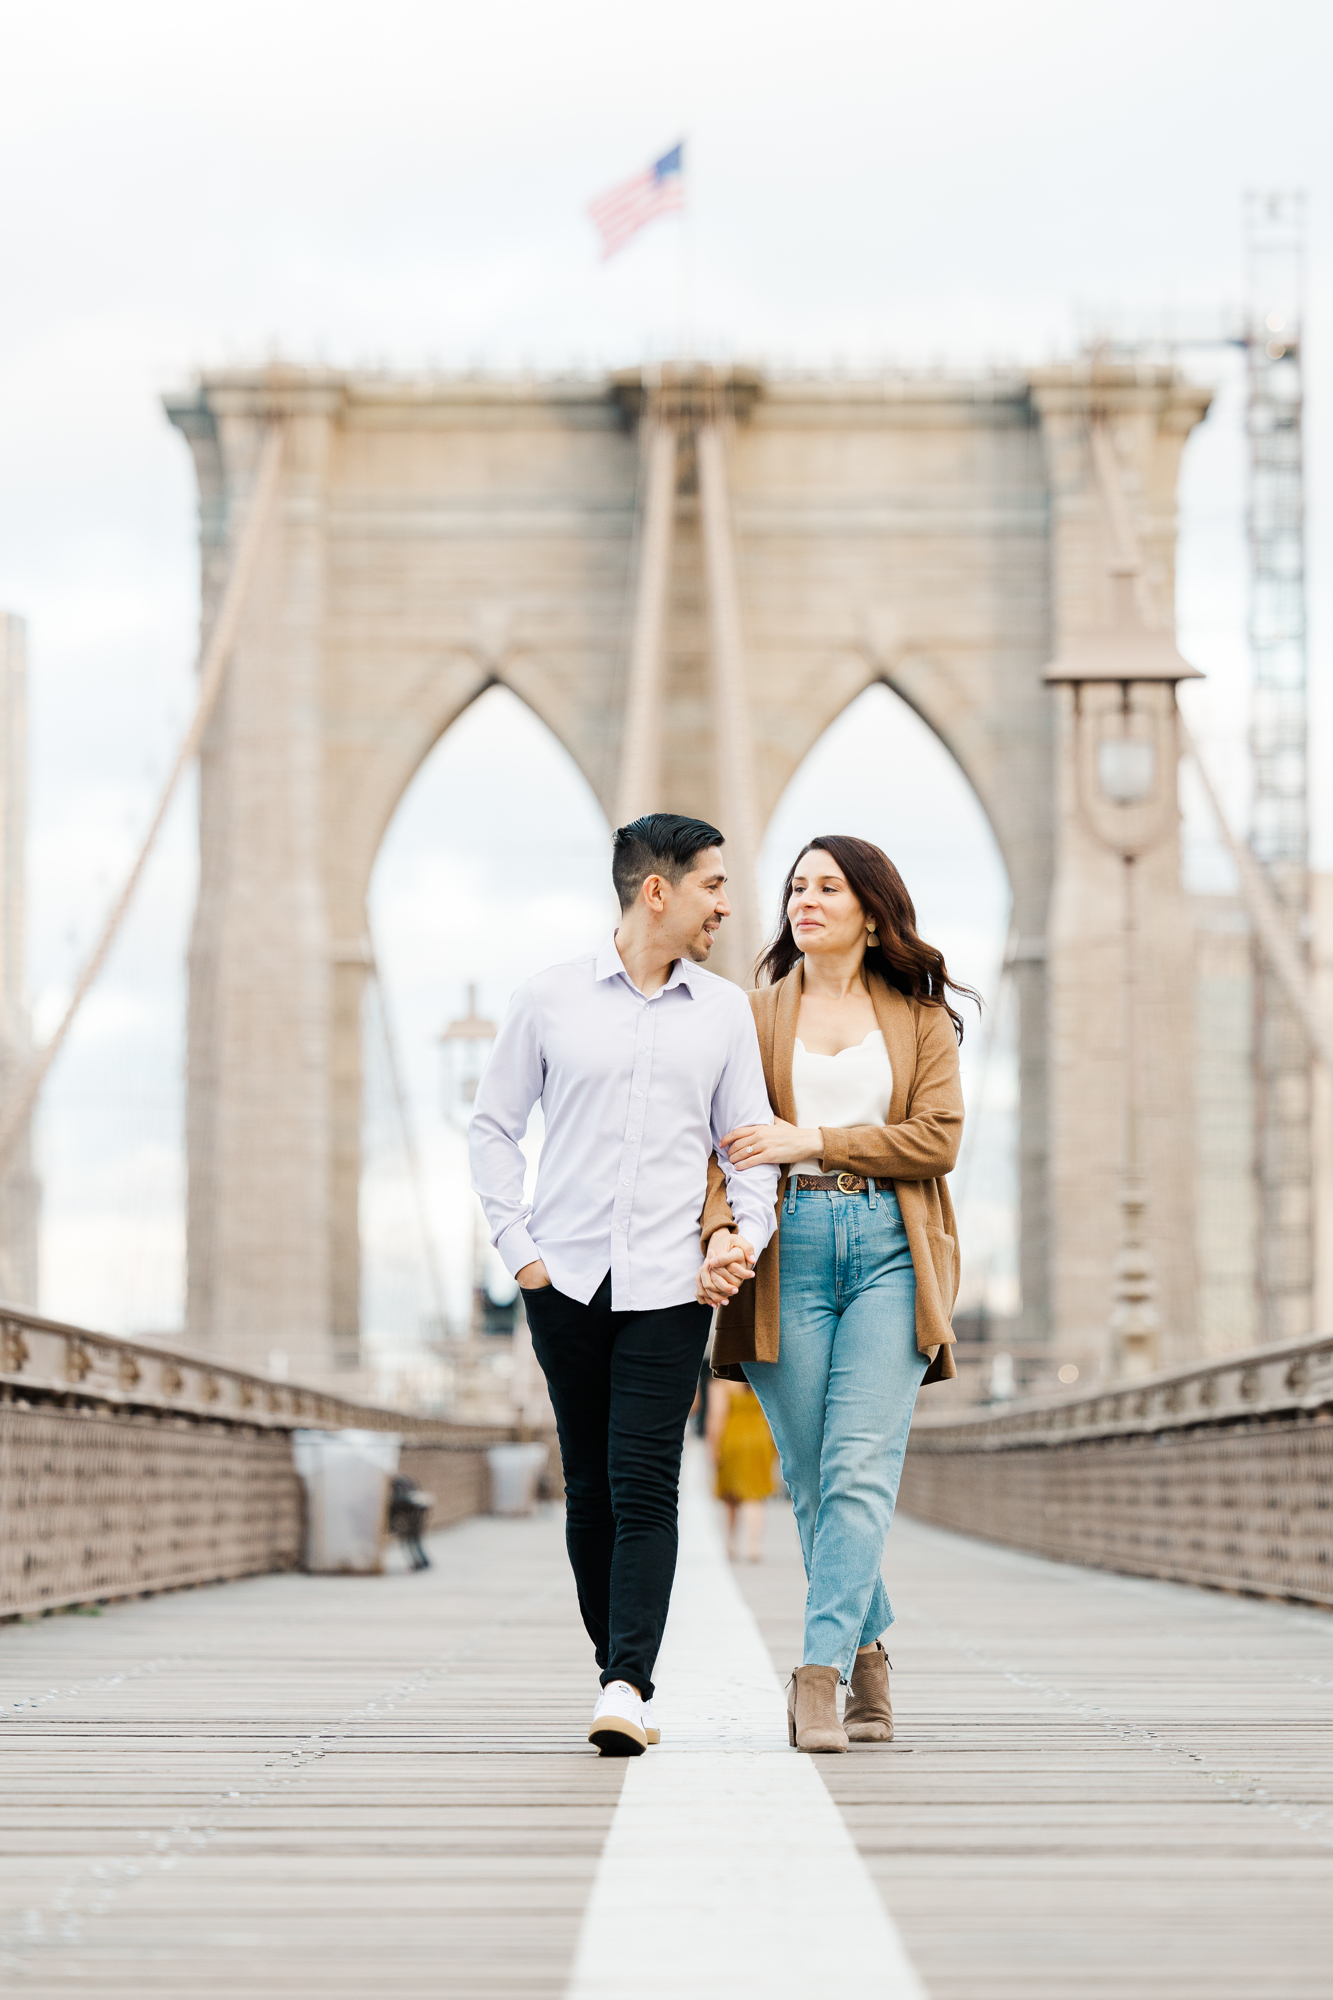 Cute New York Engagement Photos on the Brooklyn Bridge